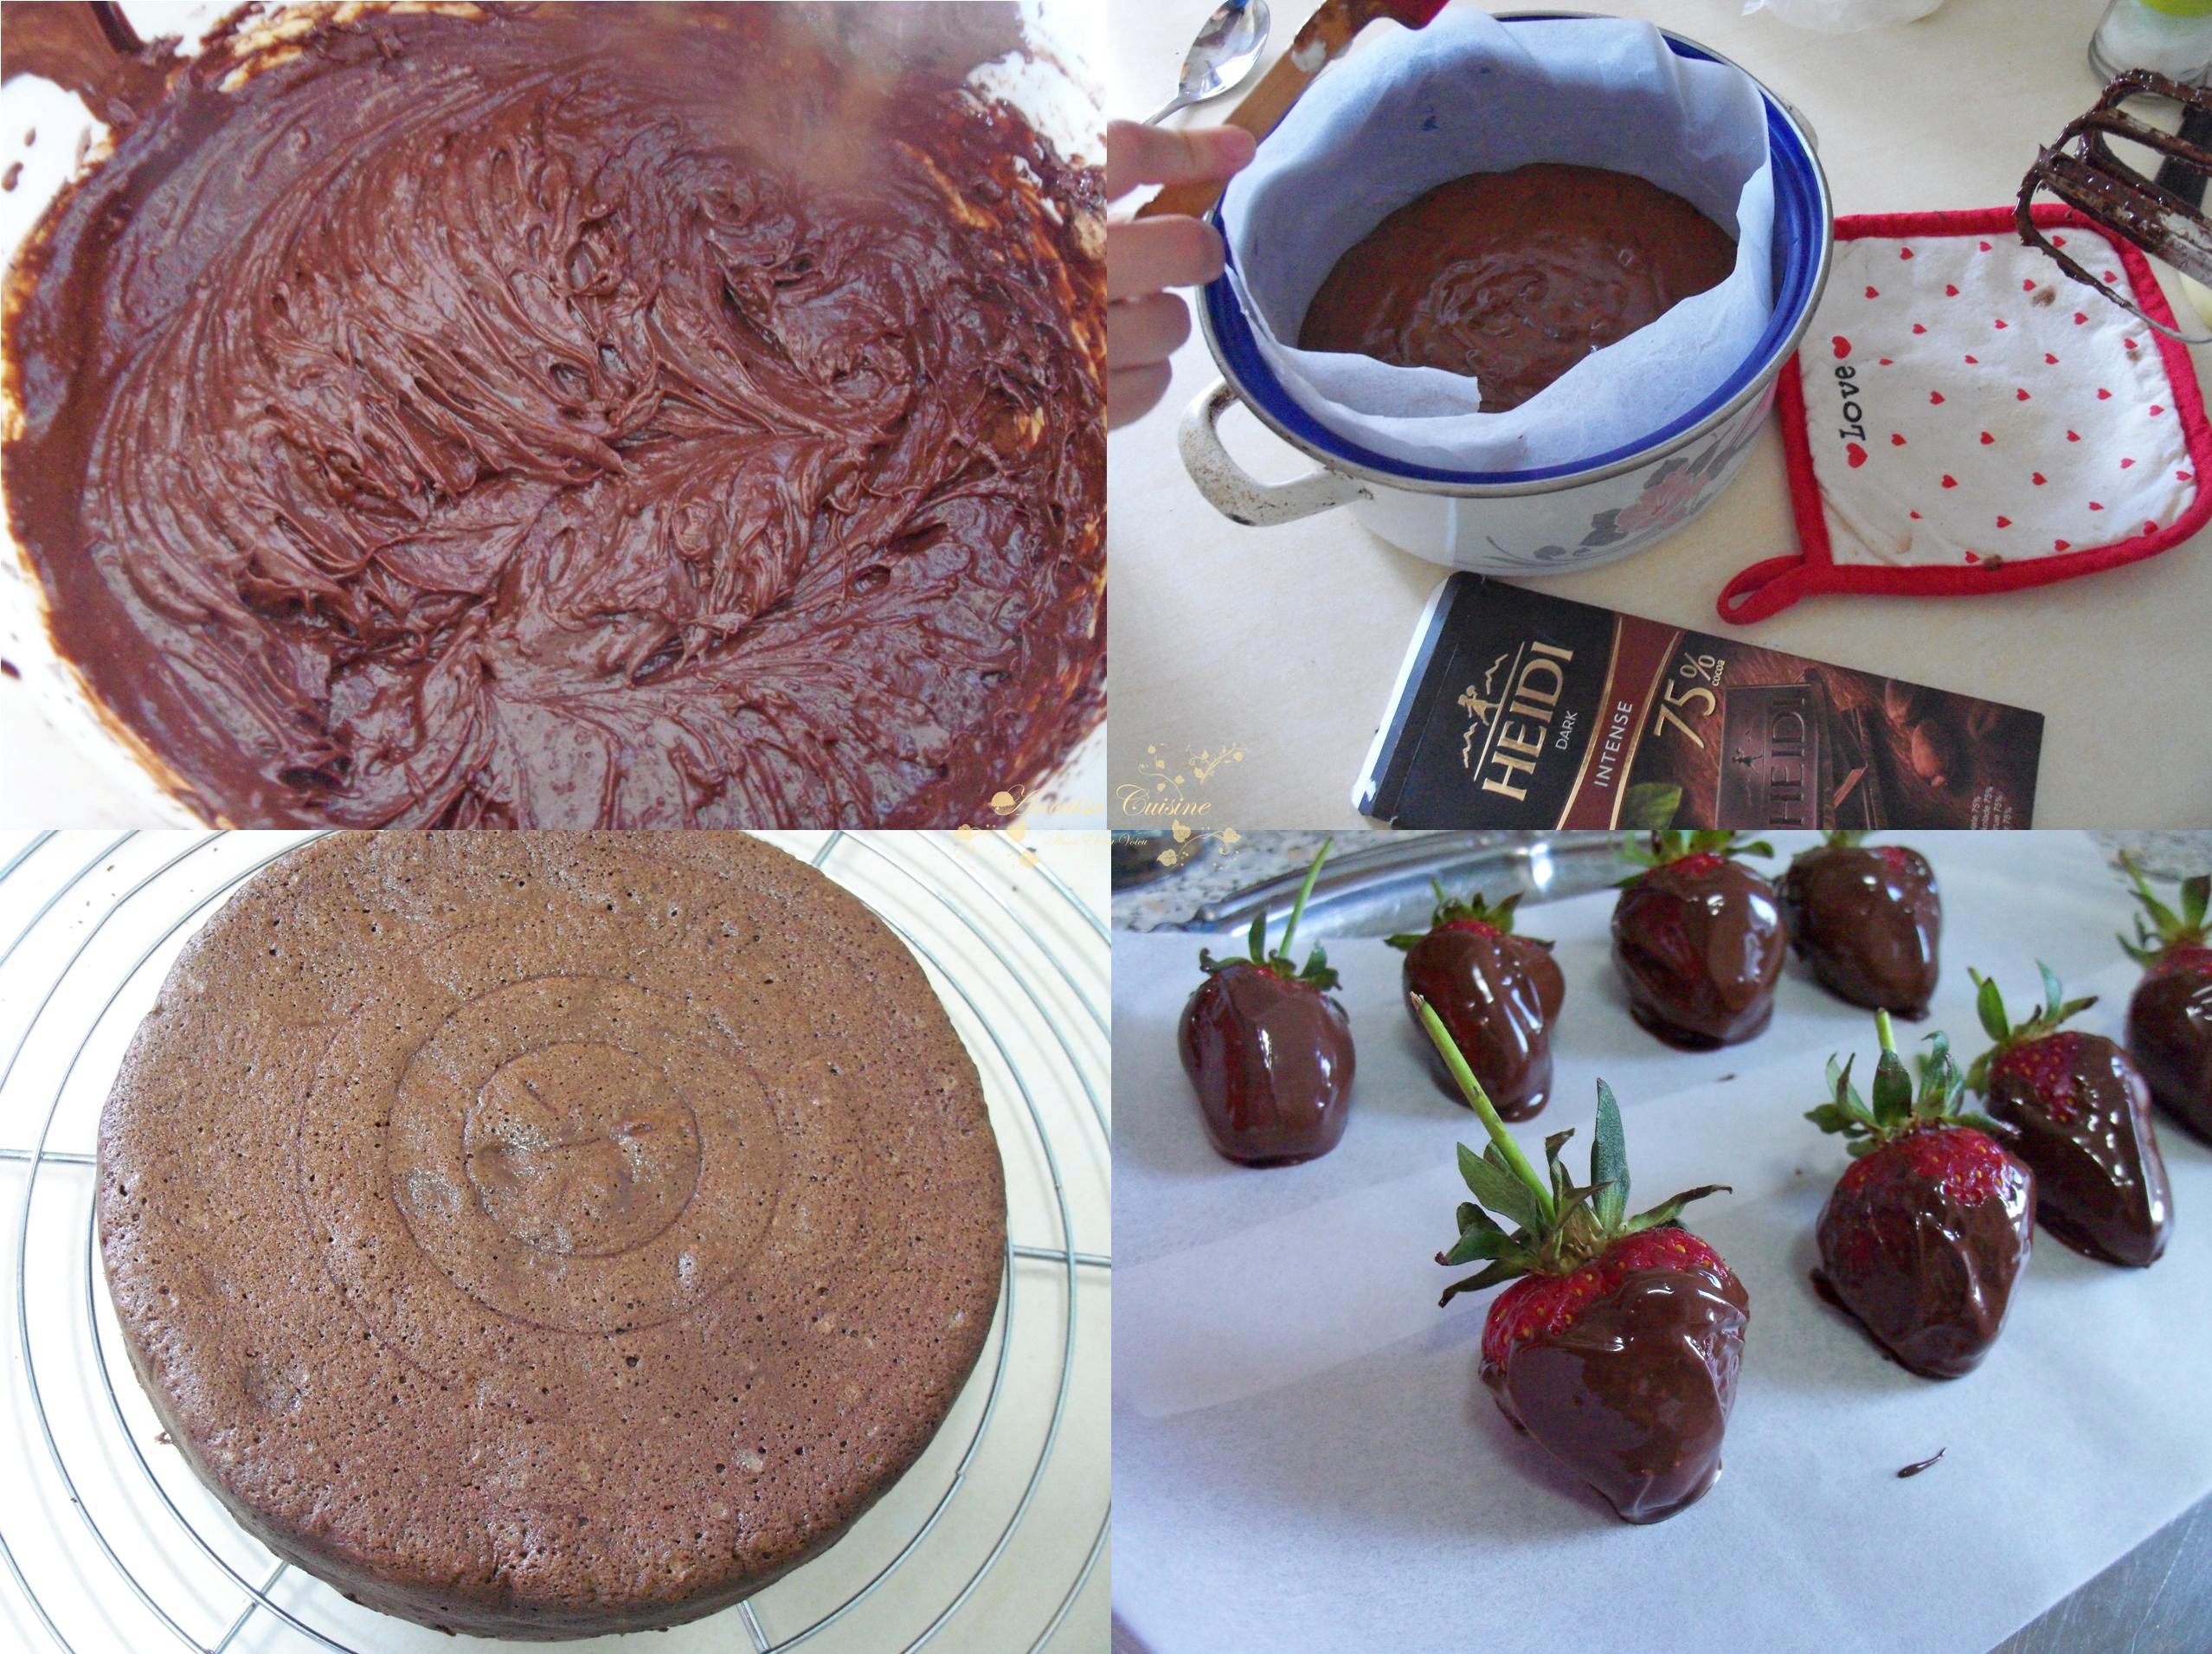 Desert tort de ciocolata, cu frisca si capsuni